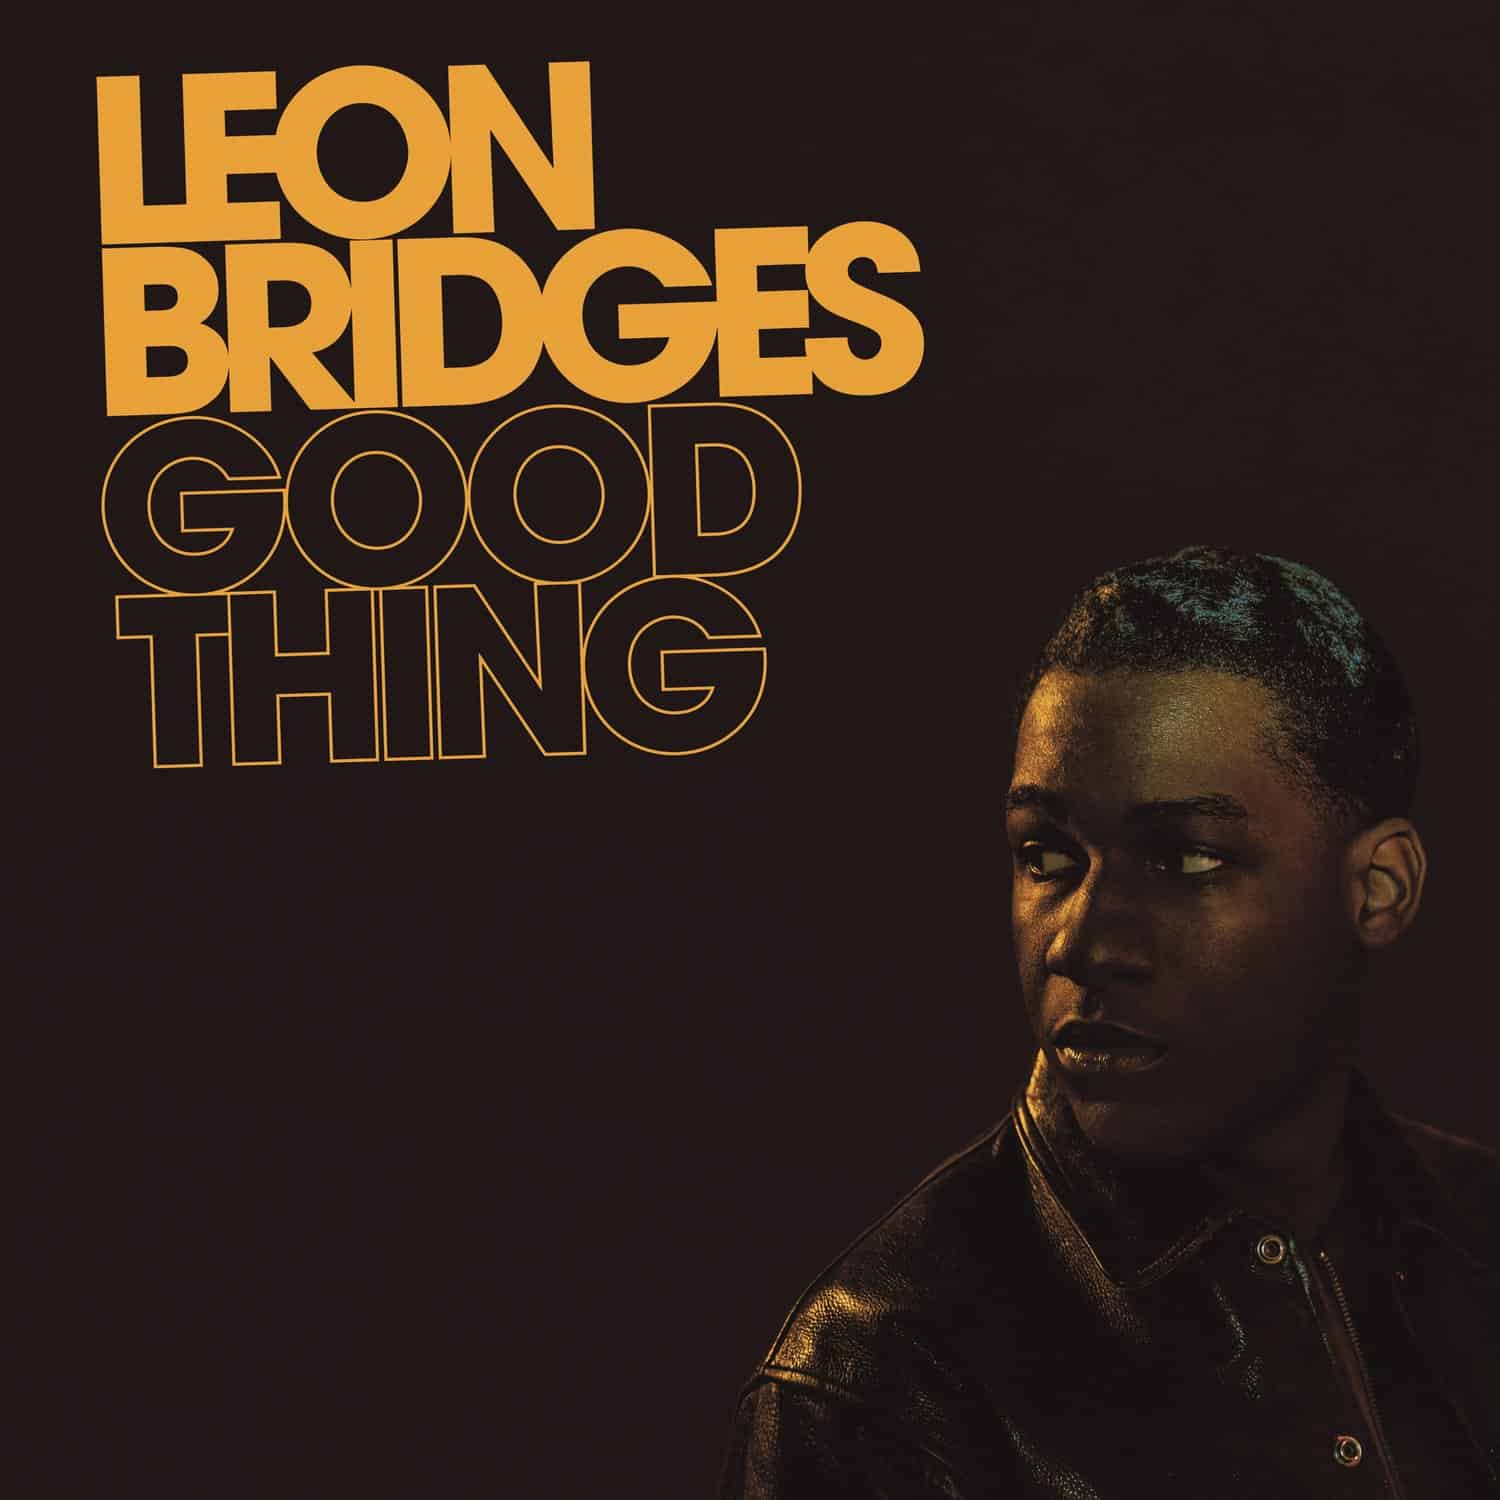 Leon-Bridges-Good-Thing-vinyl-record-album-front